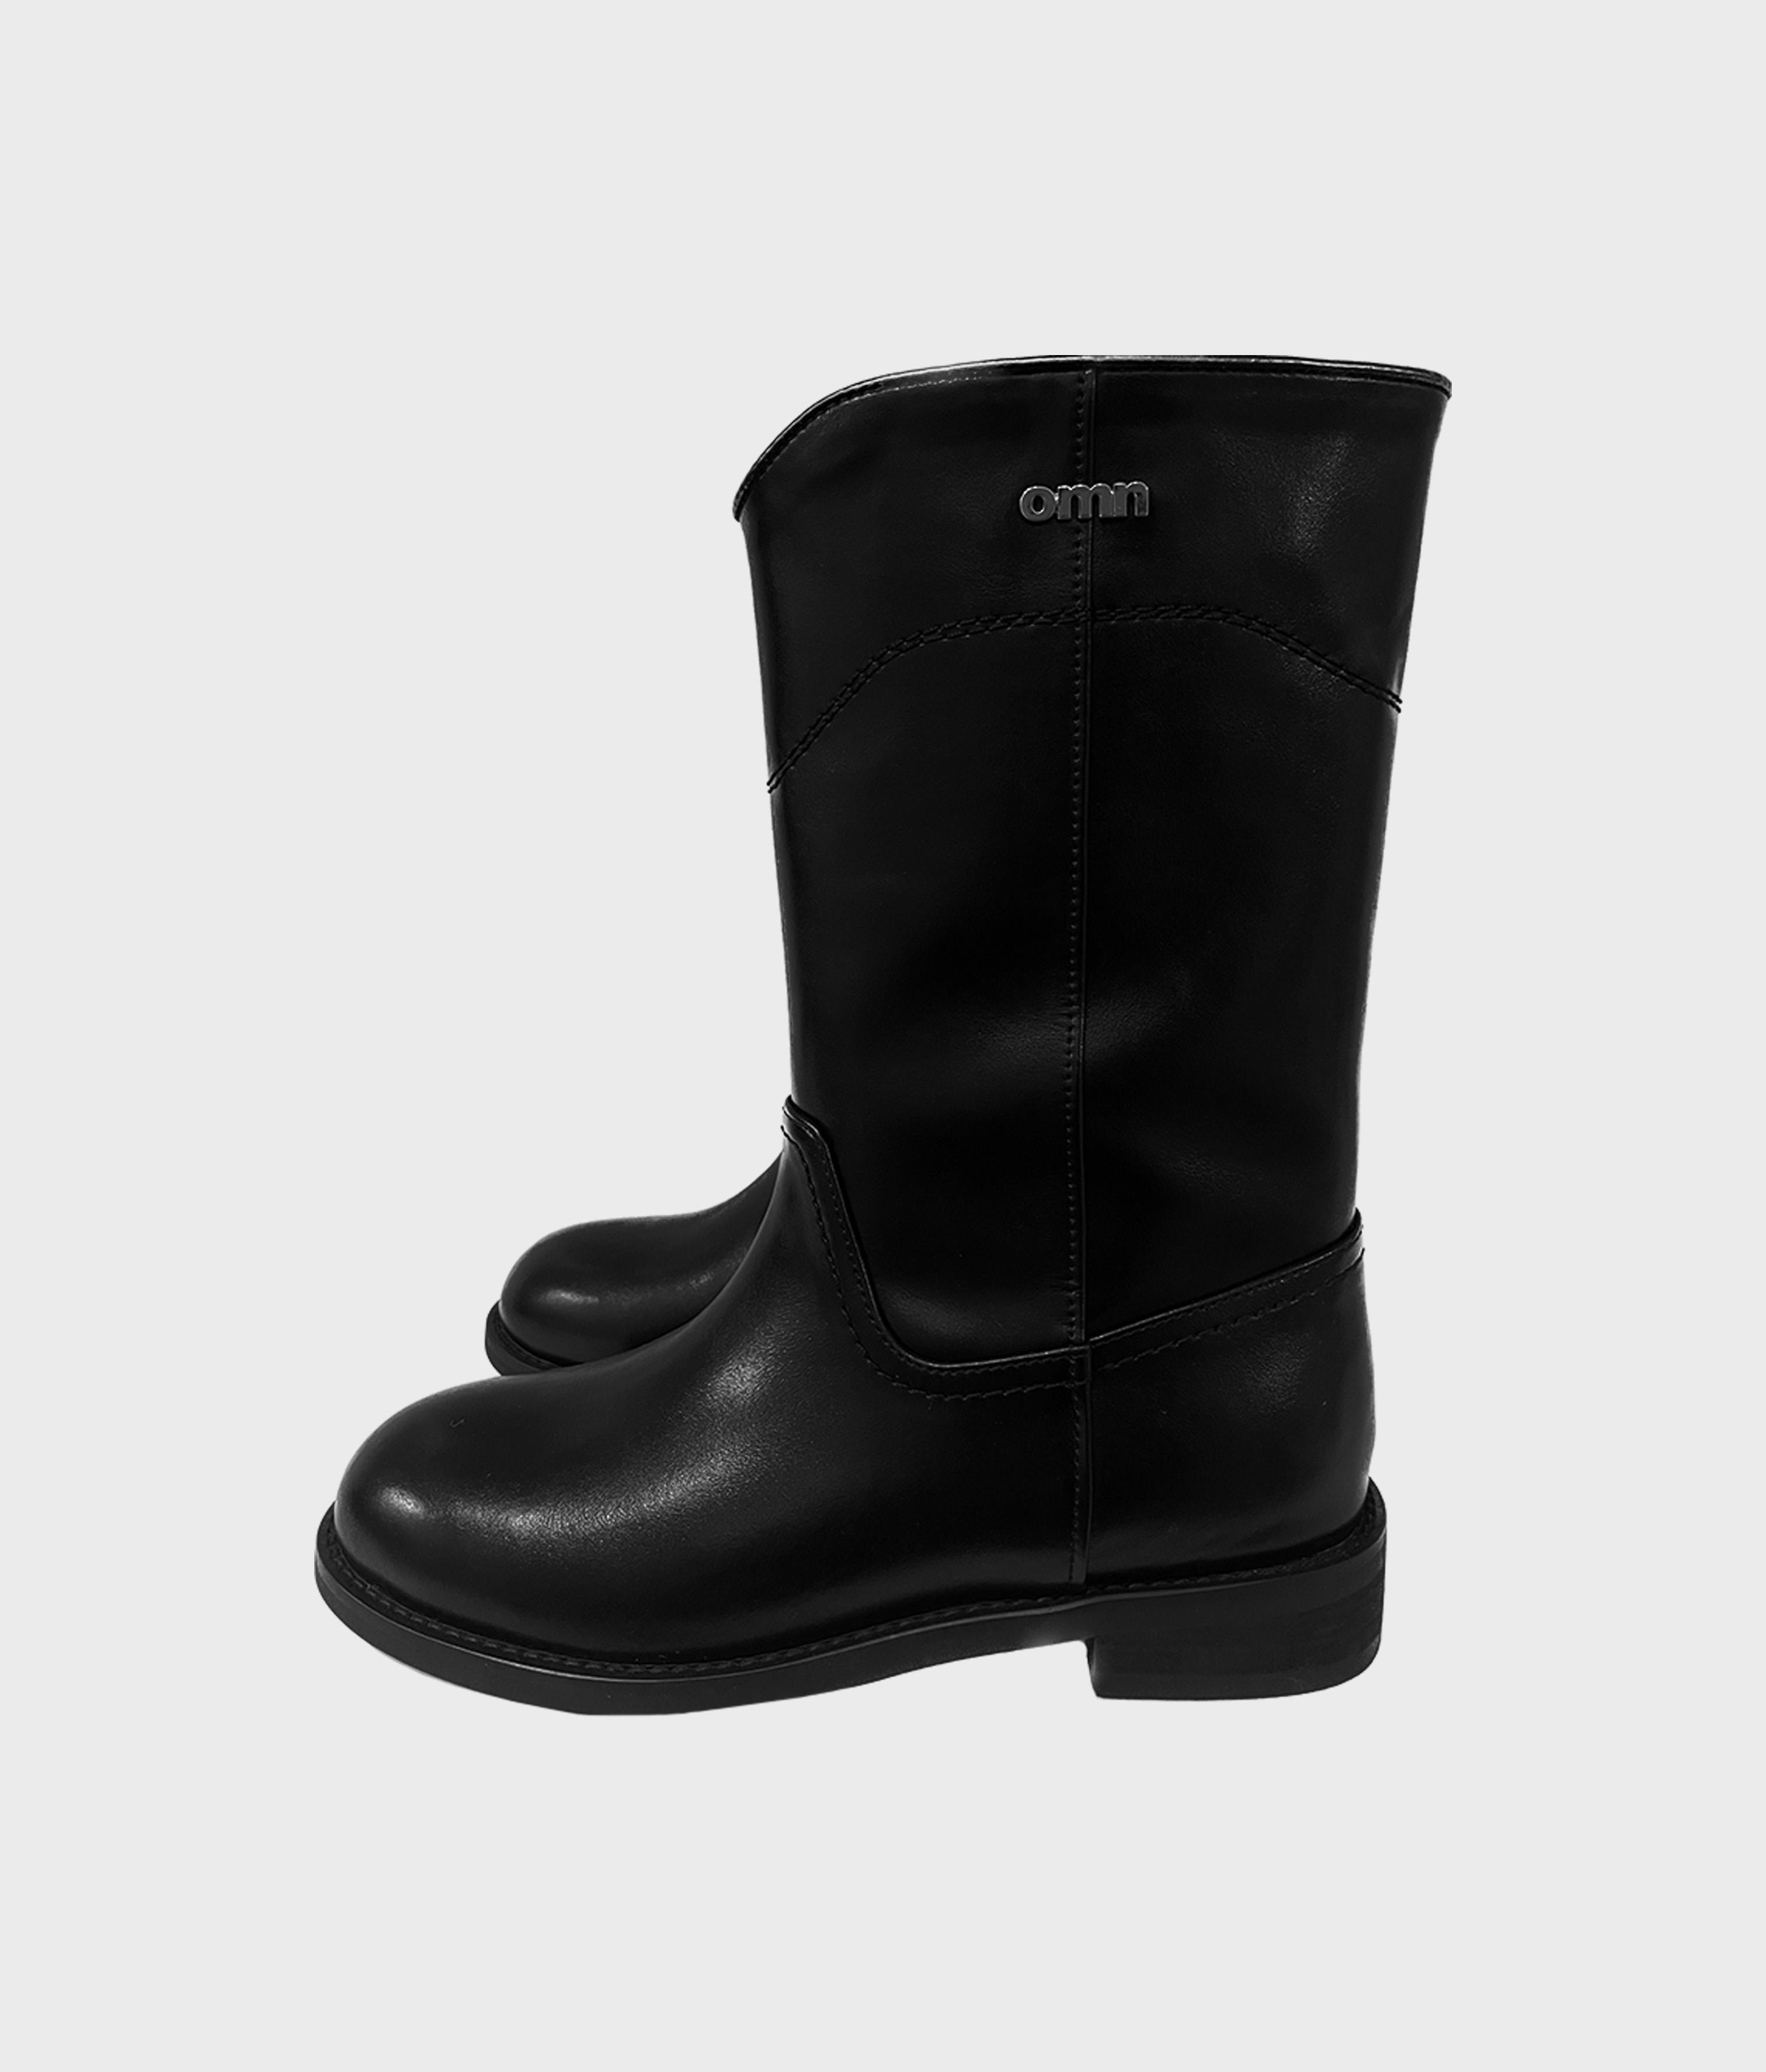 omn boots [black]